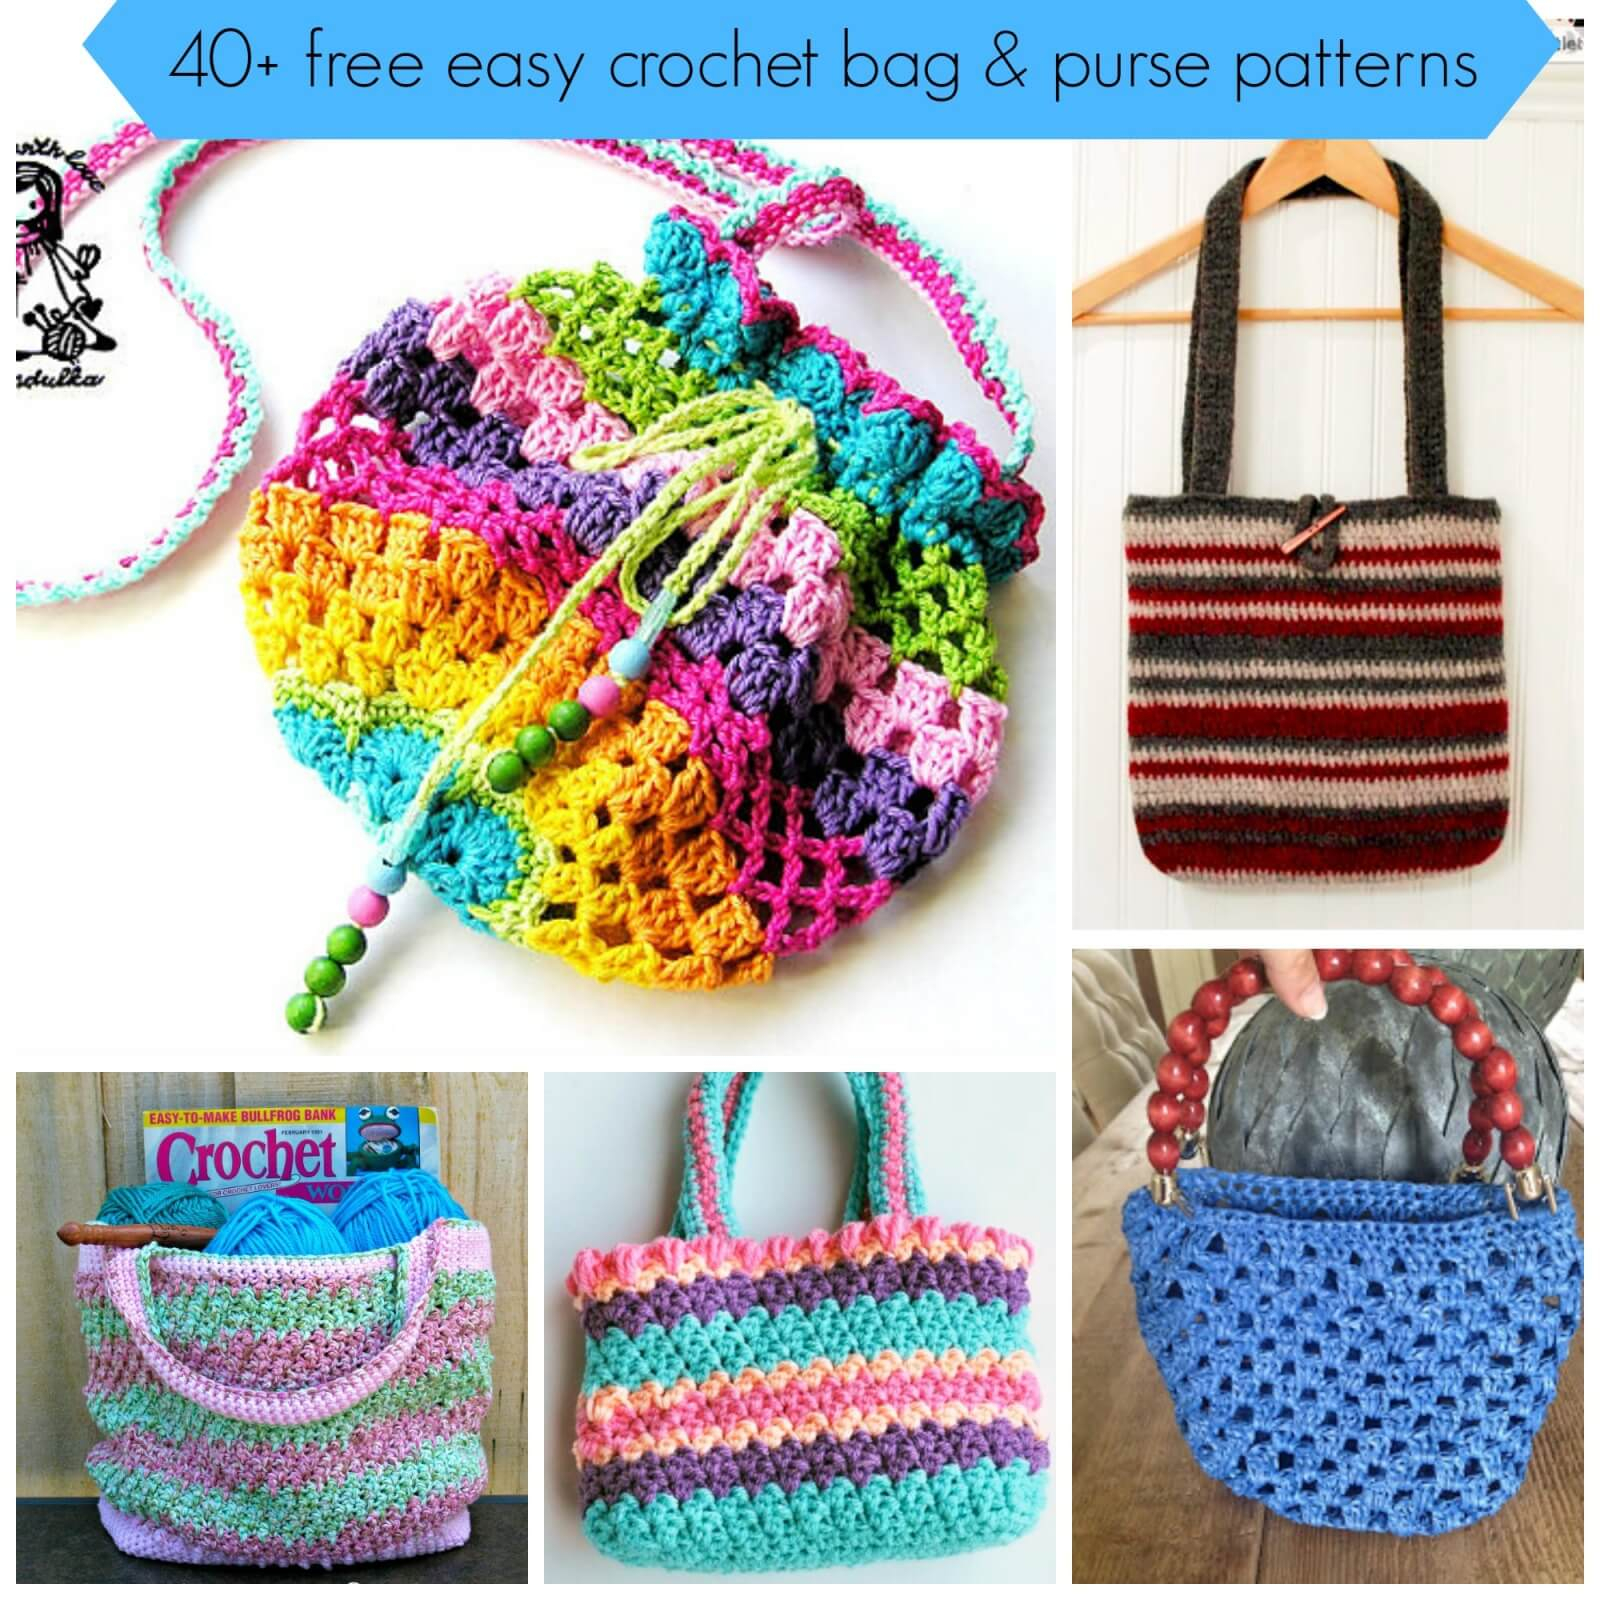 Designer Crochet Bag Patterns 40 Free Easy Crochet Bag Purse Patterns